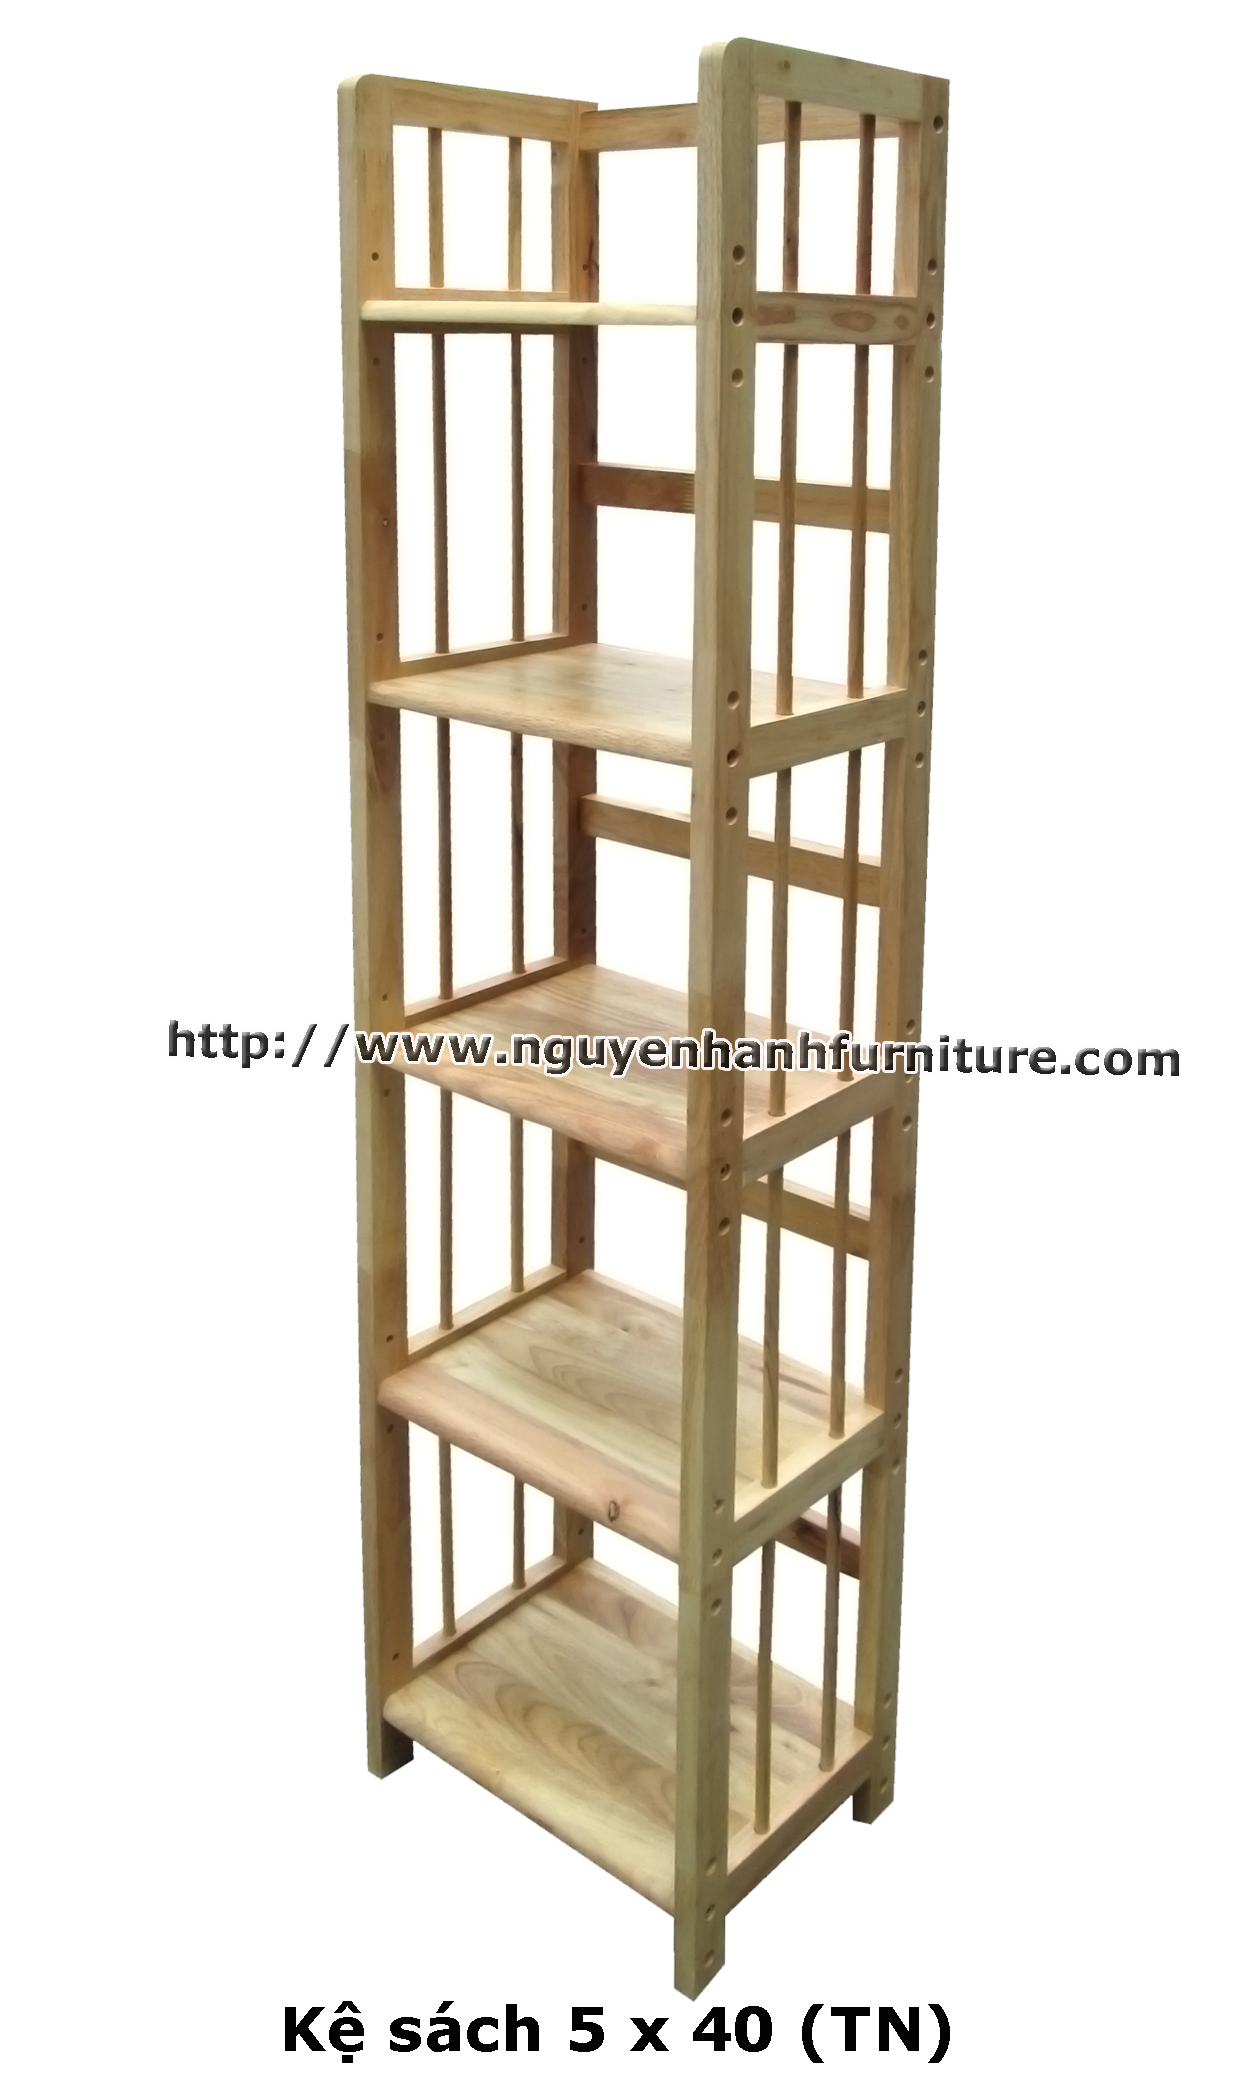 Name product: 5 storey Adjustable Bookshelf 40 (Natural) - Dimensions: 40 x 28 x 157 (H) - Description: Wood natural rubber